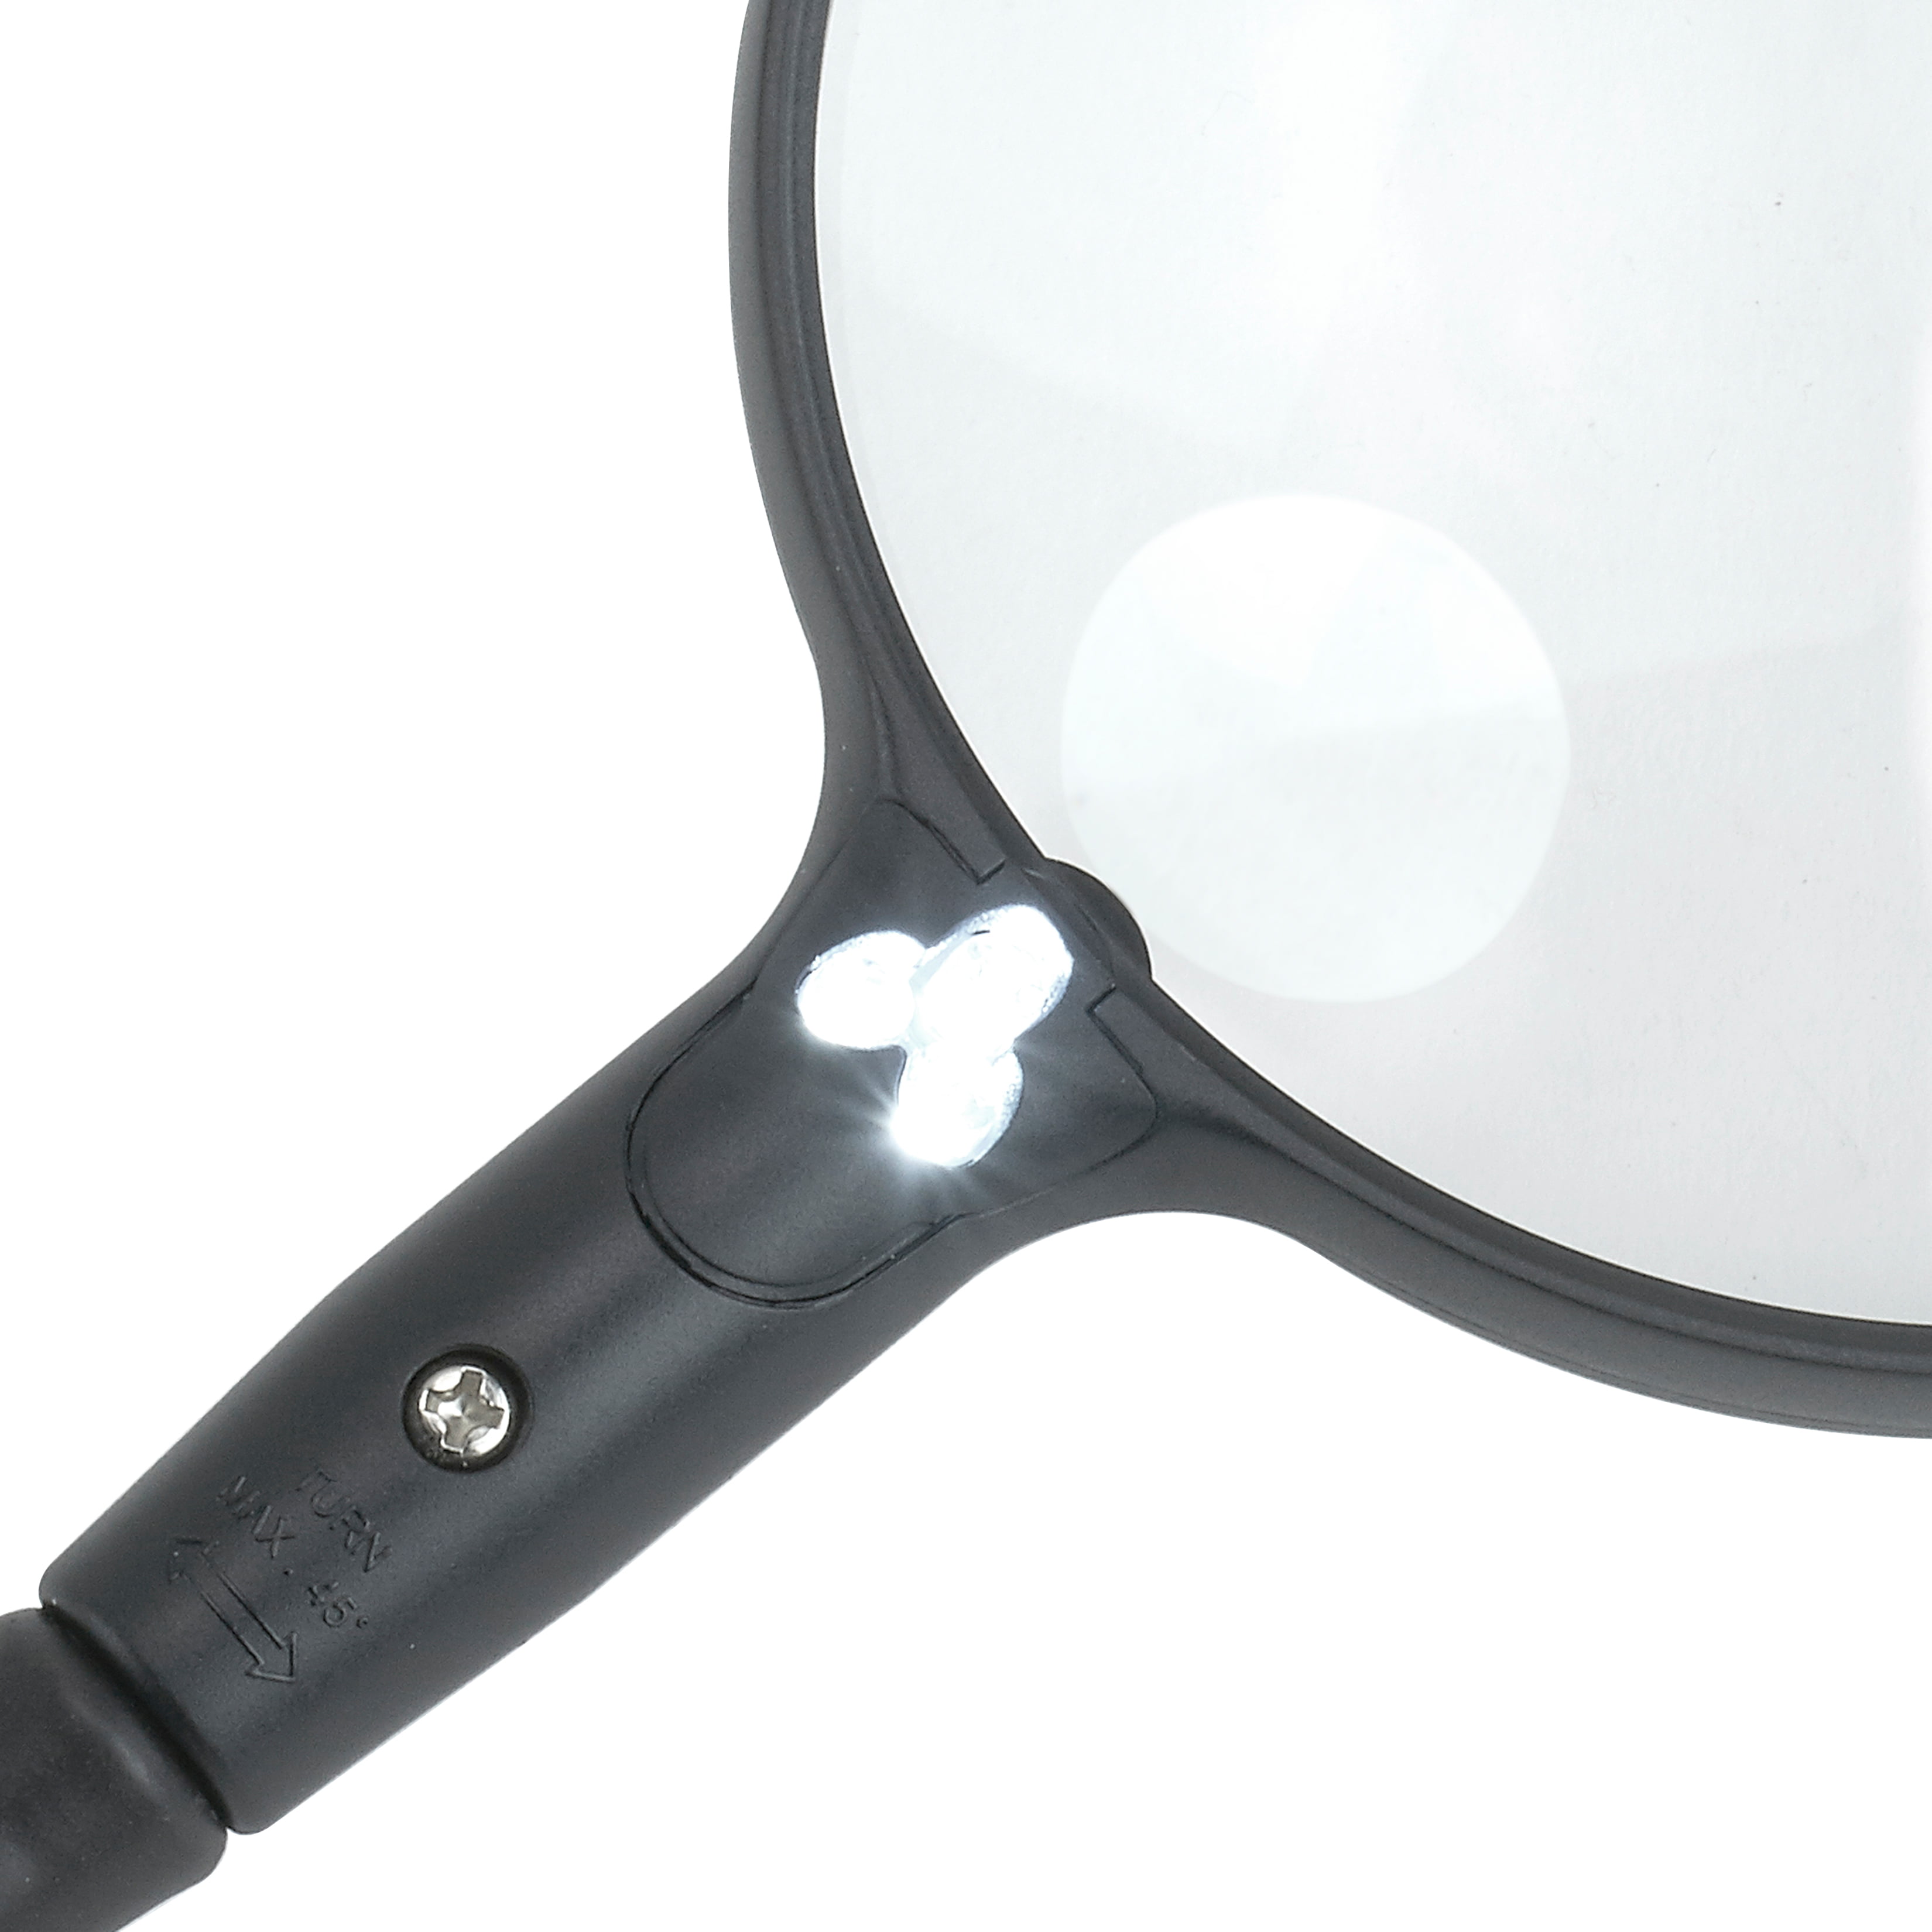 LED 2X Magnifier Desk Lamp with 5X power spot lens – The Low